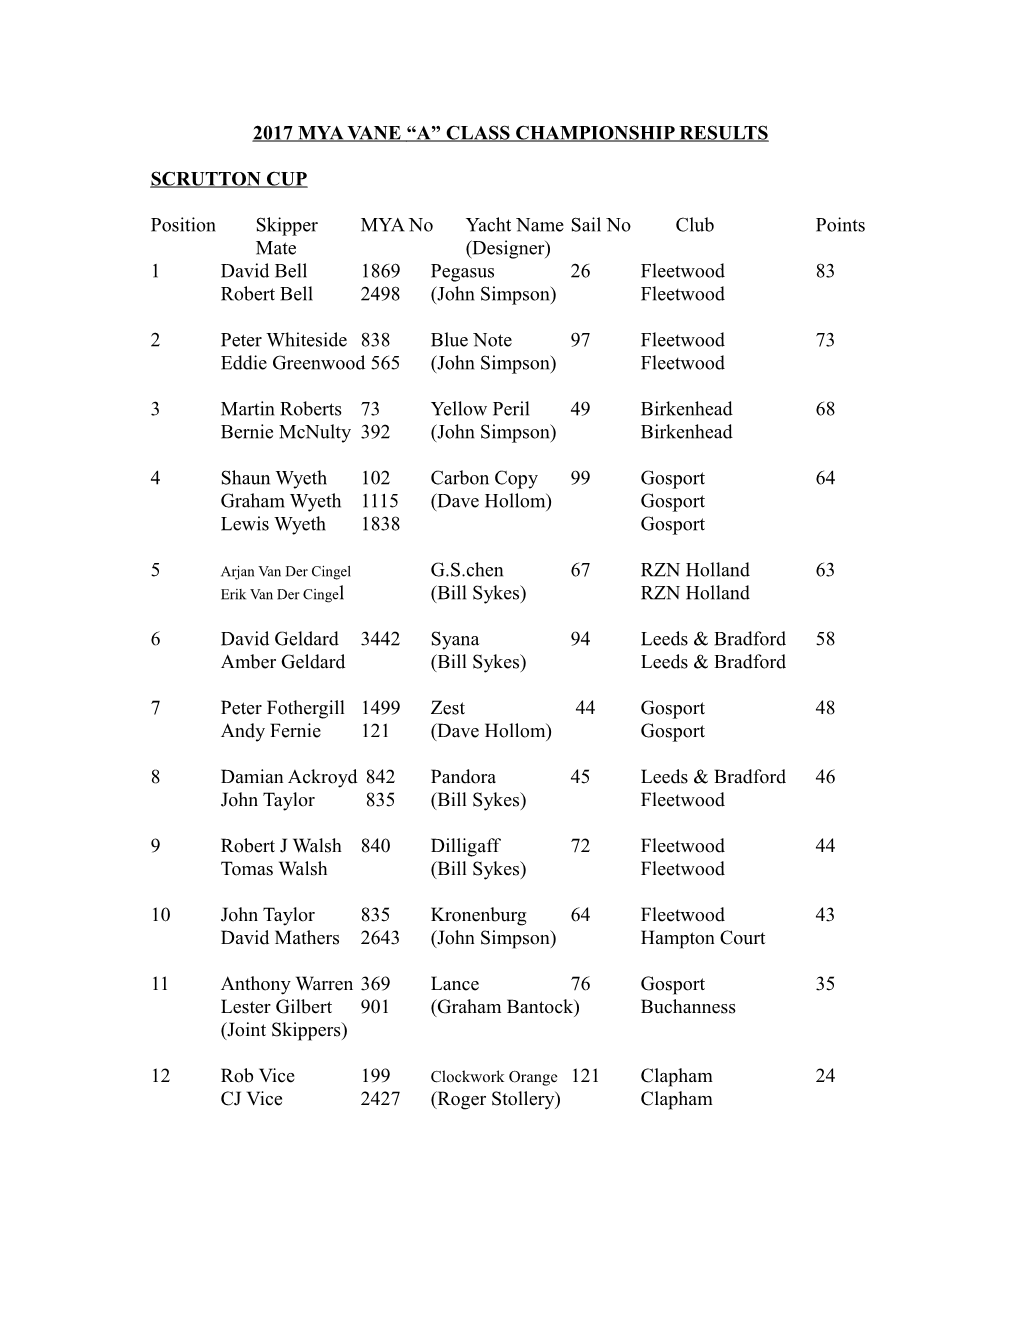 2014 Mya Vane a Class Championship Results